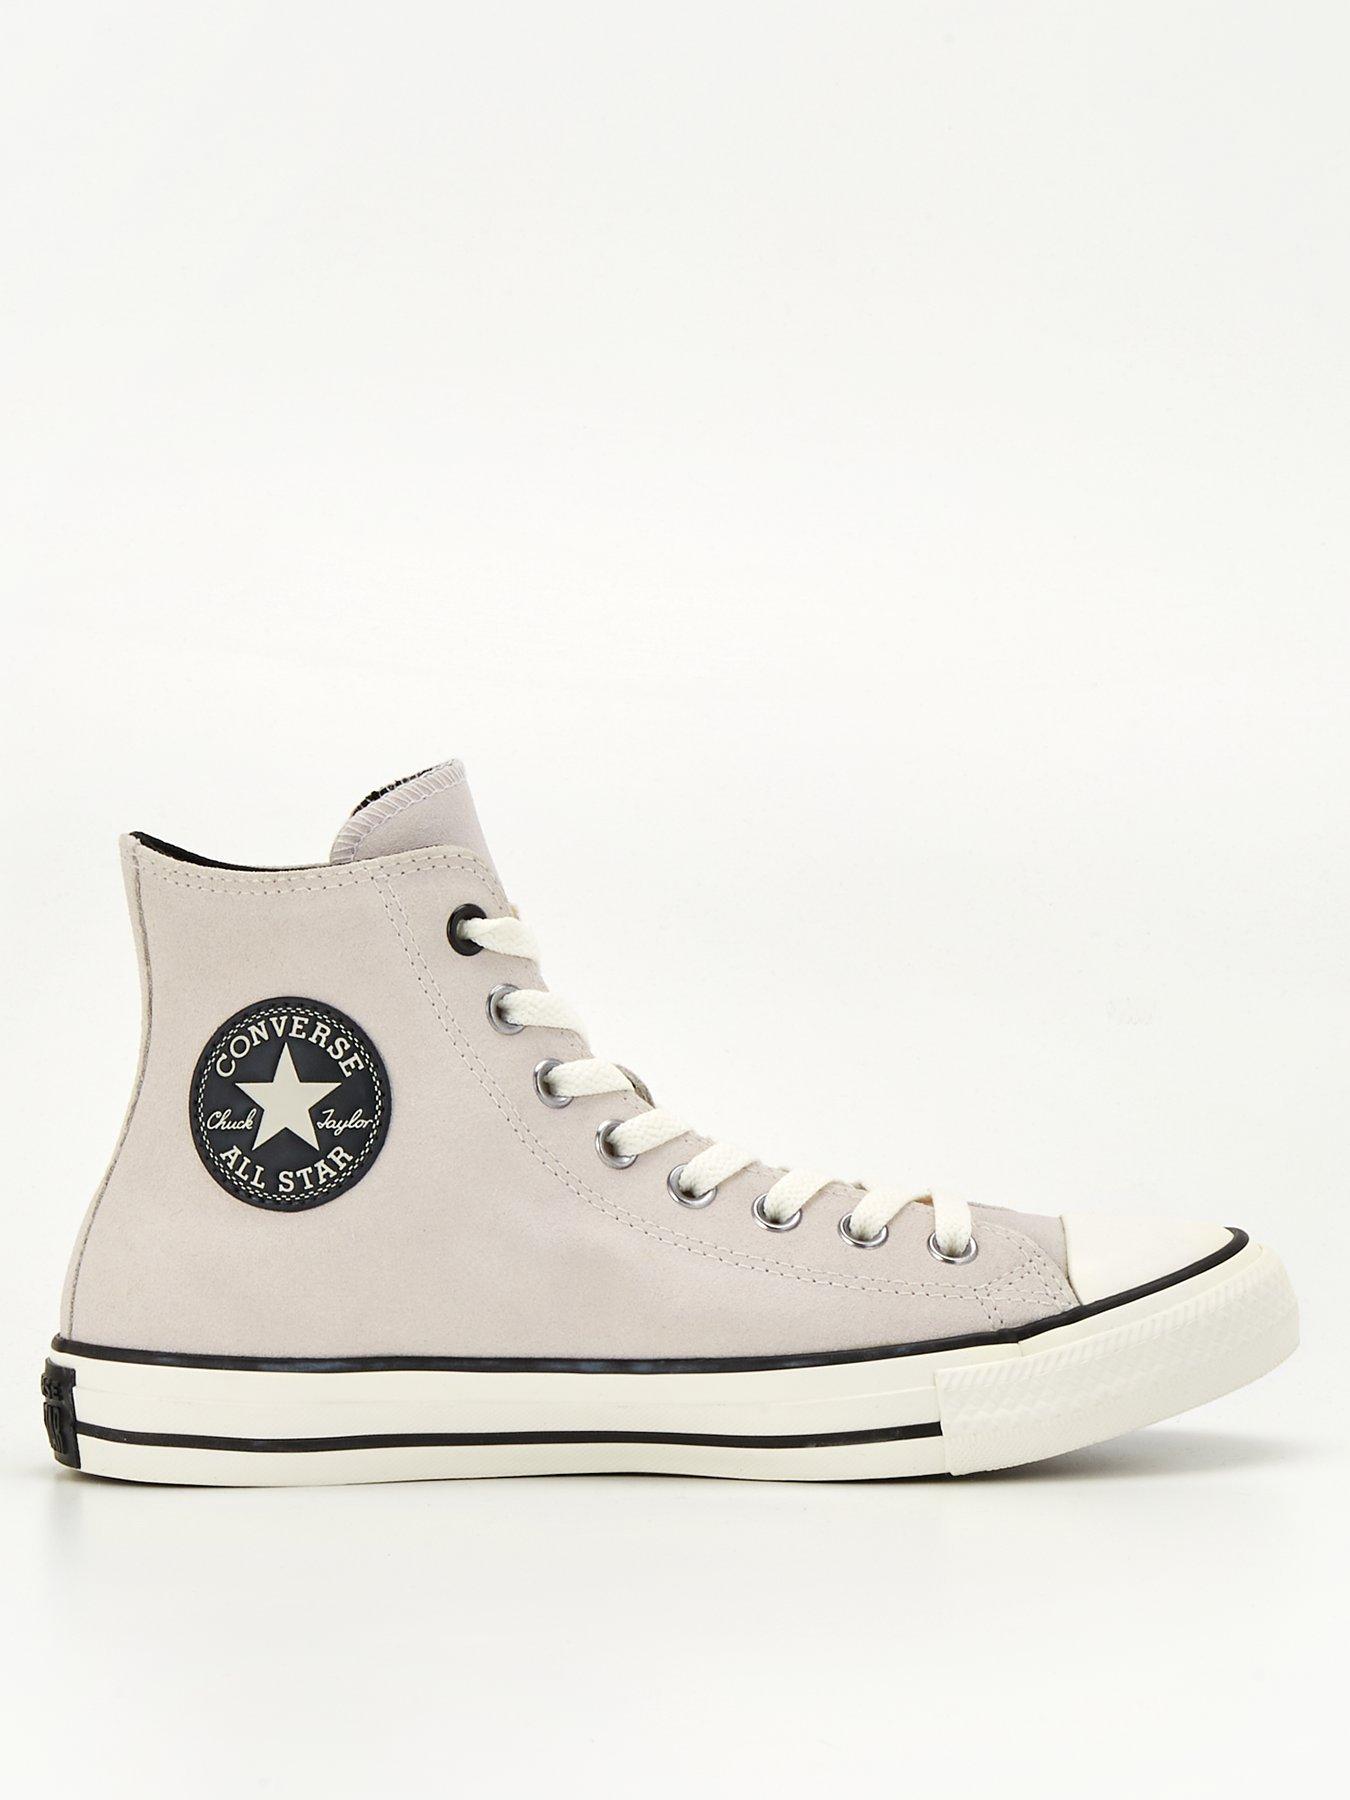 Converse Chuck Taylor All Star Suede Hi-Tops  - Light Grey, Light Grey, Size 5, Women